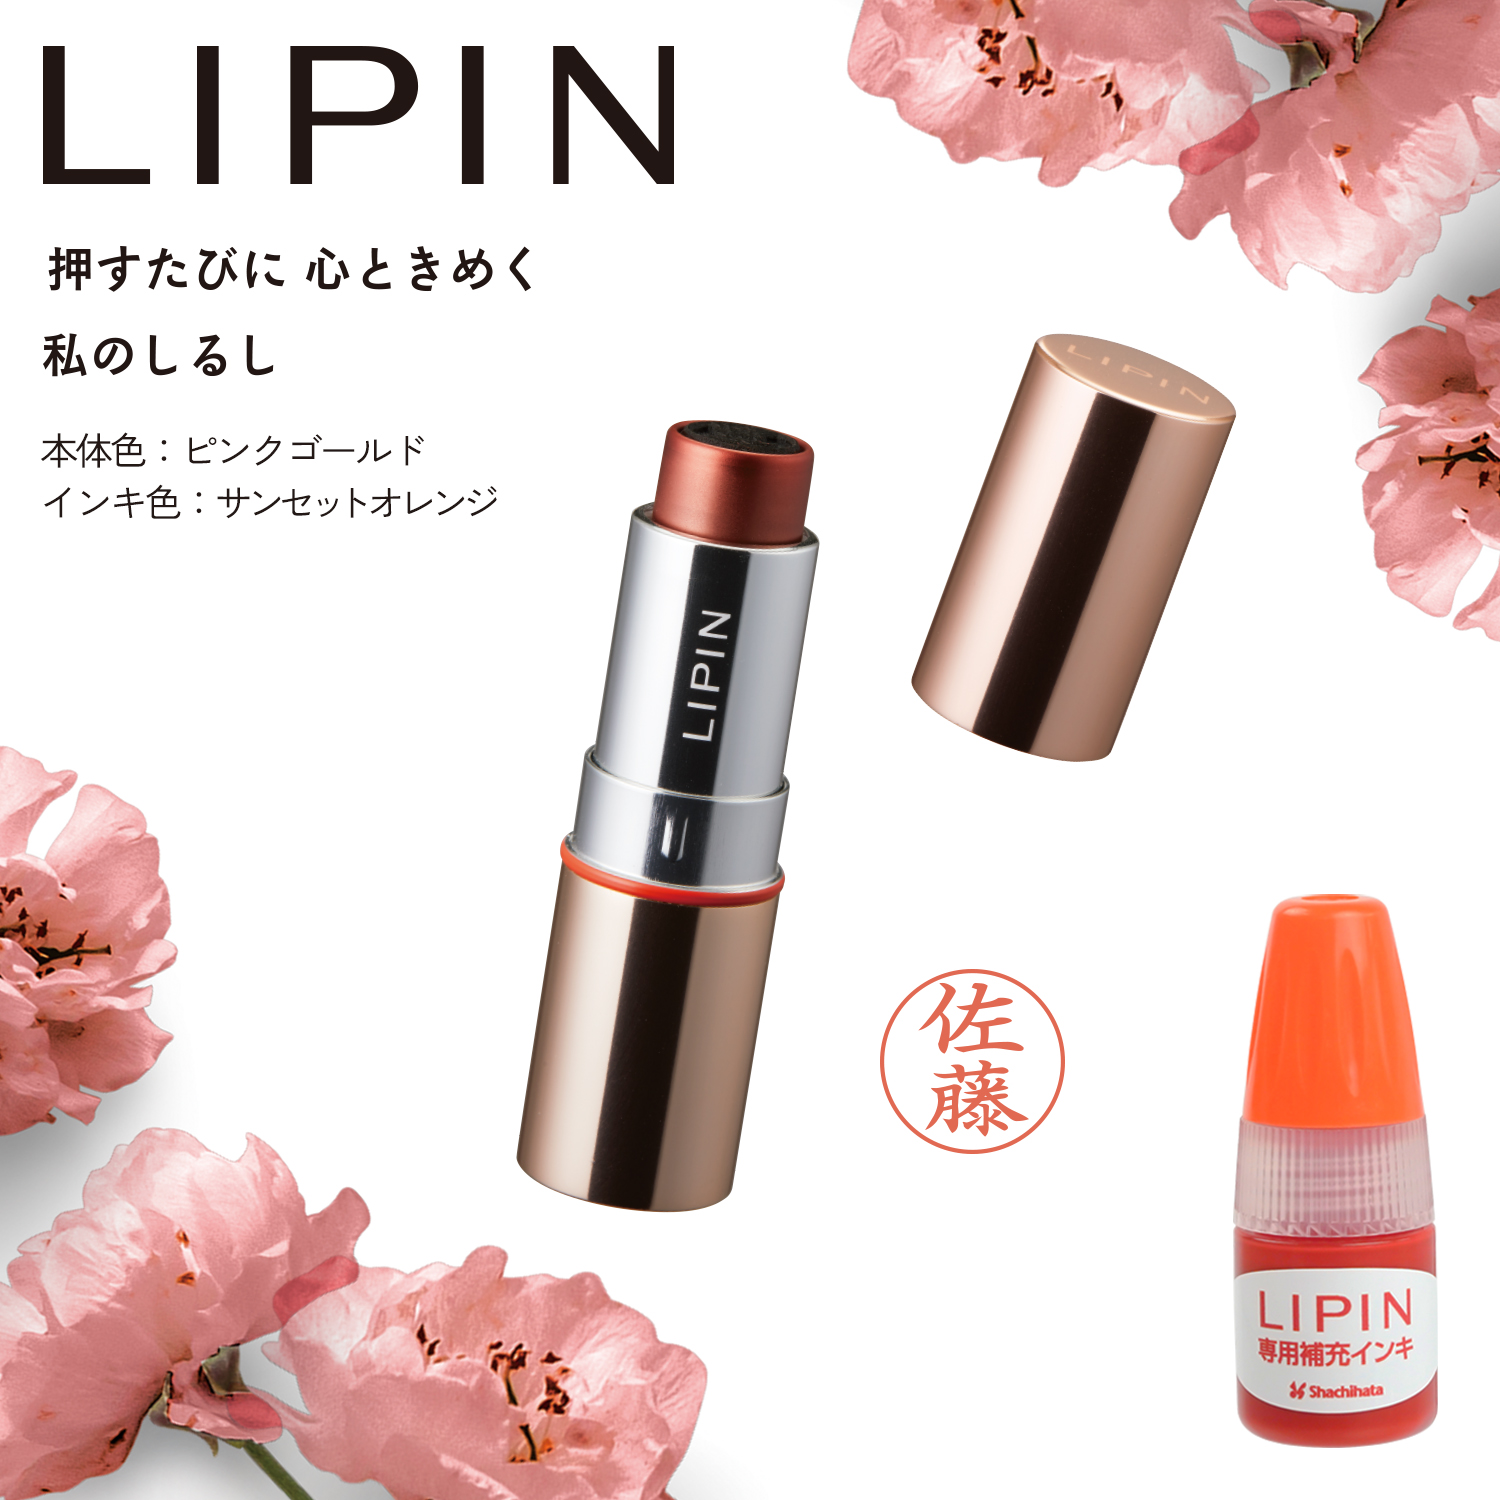 LIPIN+専用補充インキセット【本体色:ピンクゴールド/インキ色:サンセットオレンジ】_1